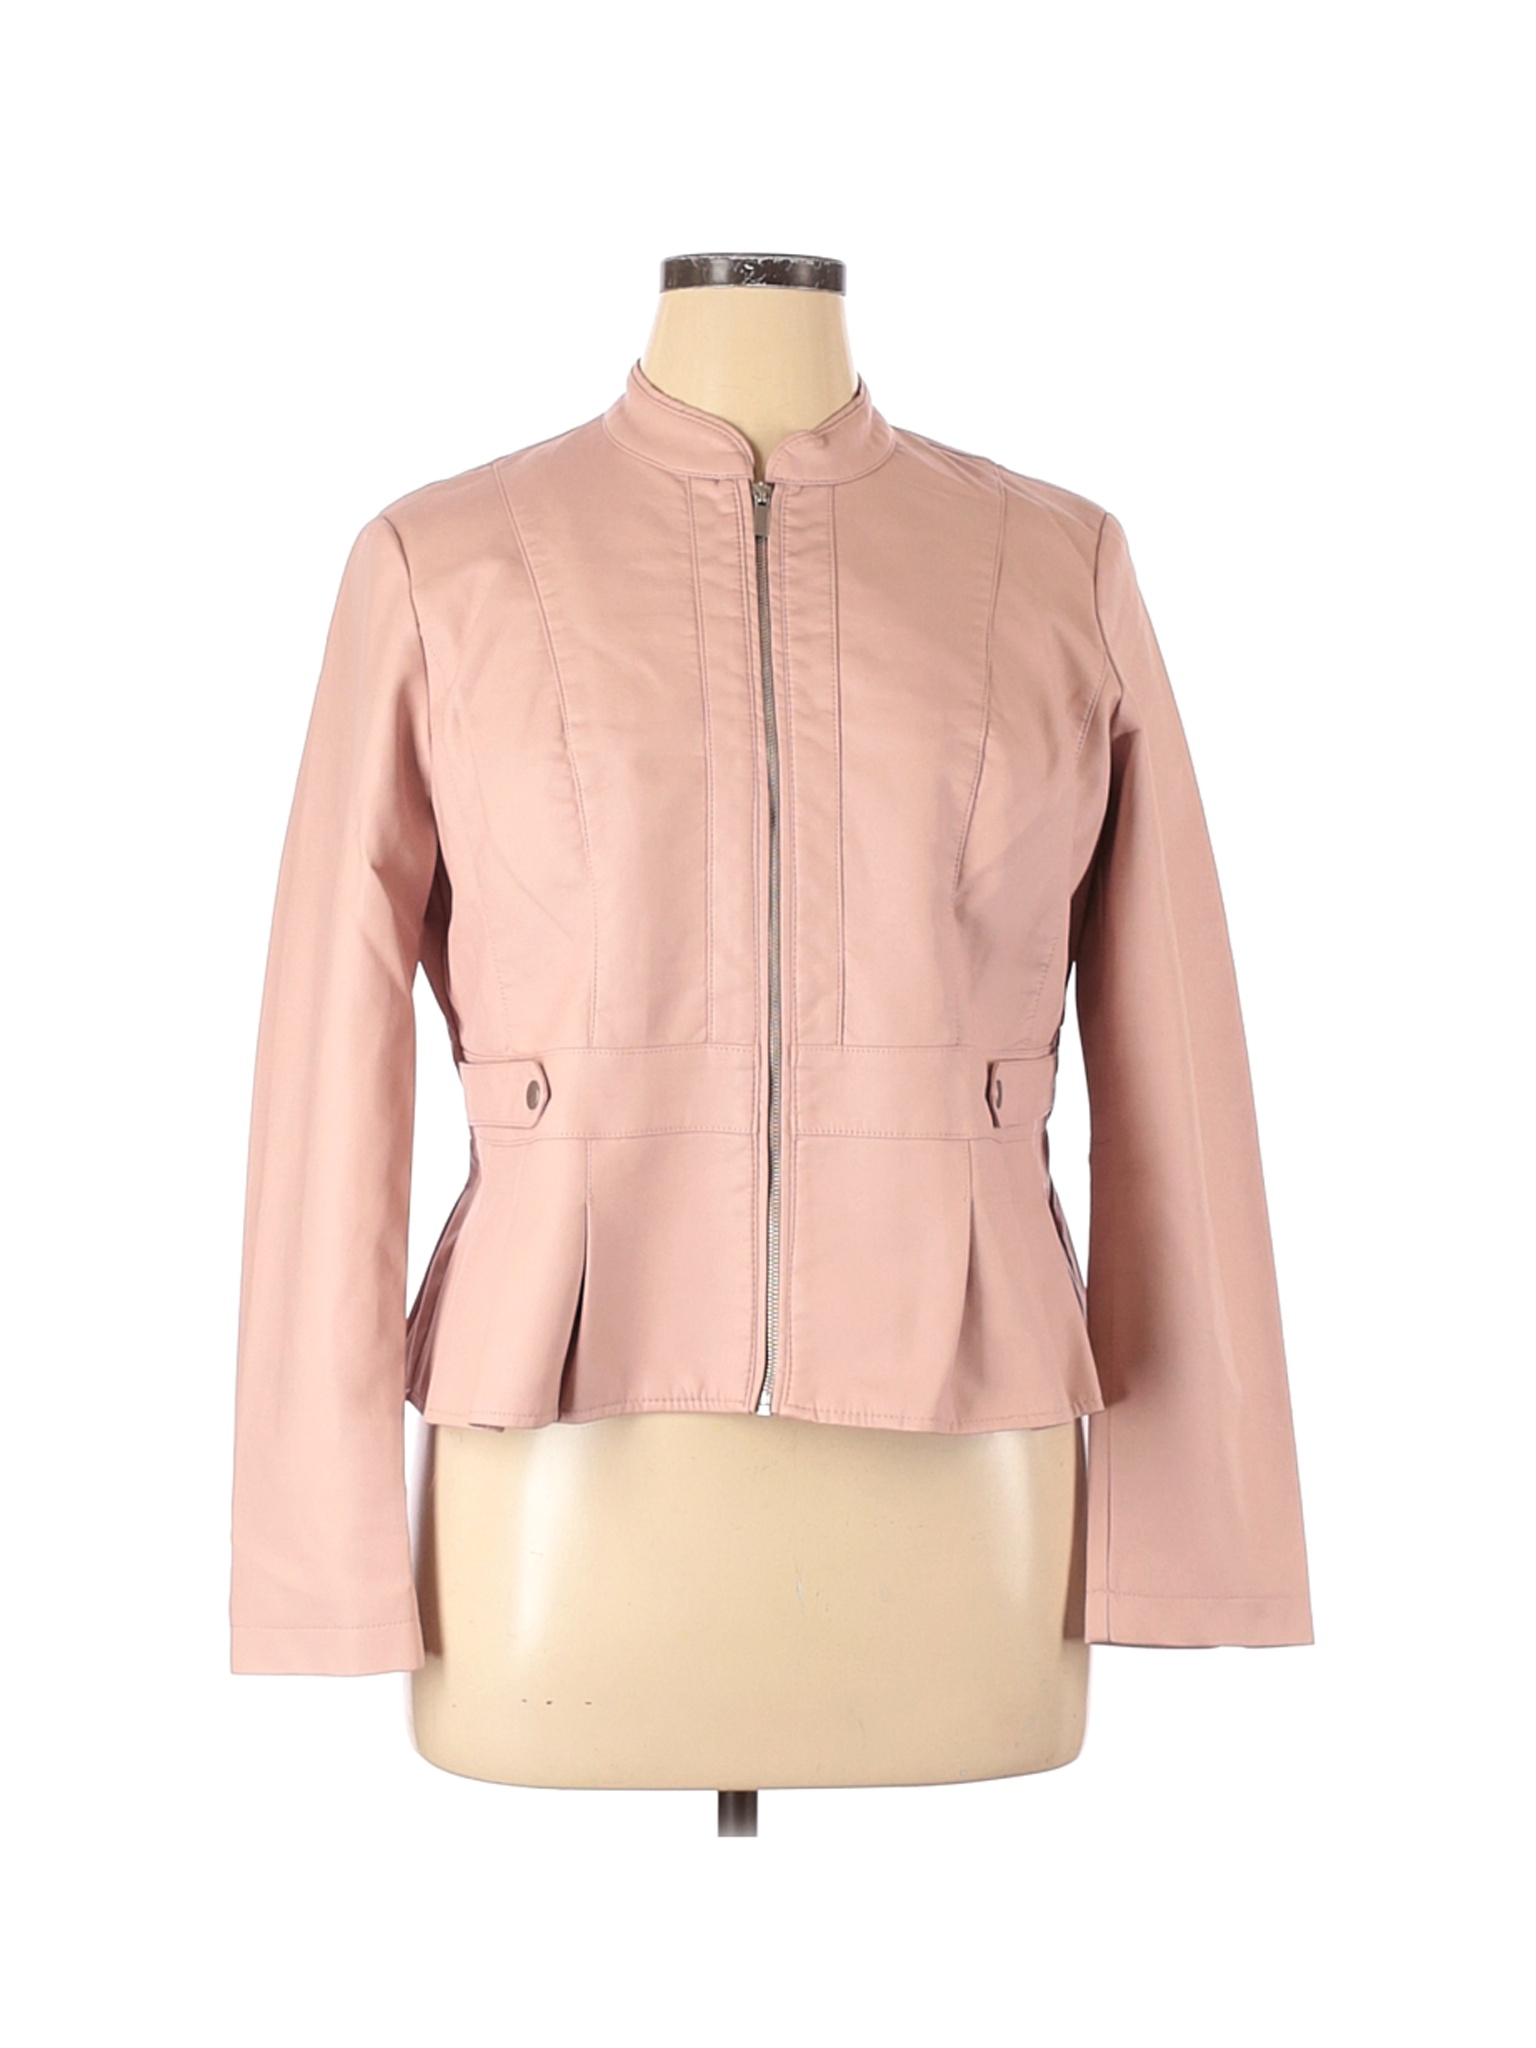 Baccini Women Pink Faux Leather Jacket XL Petites | eBay